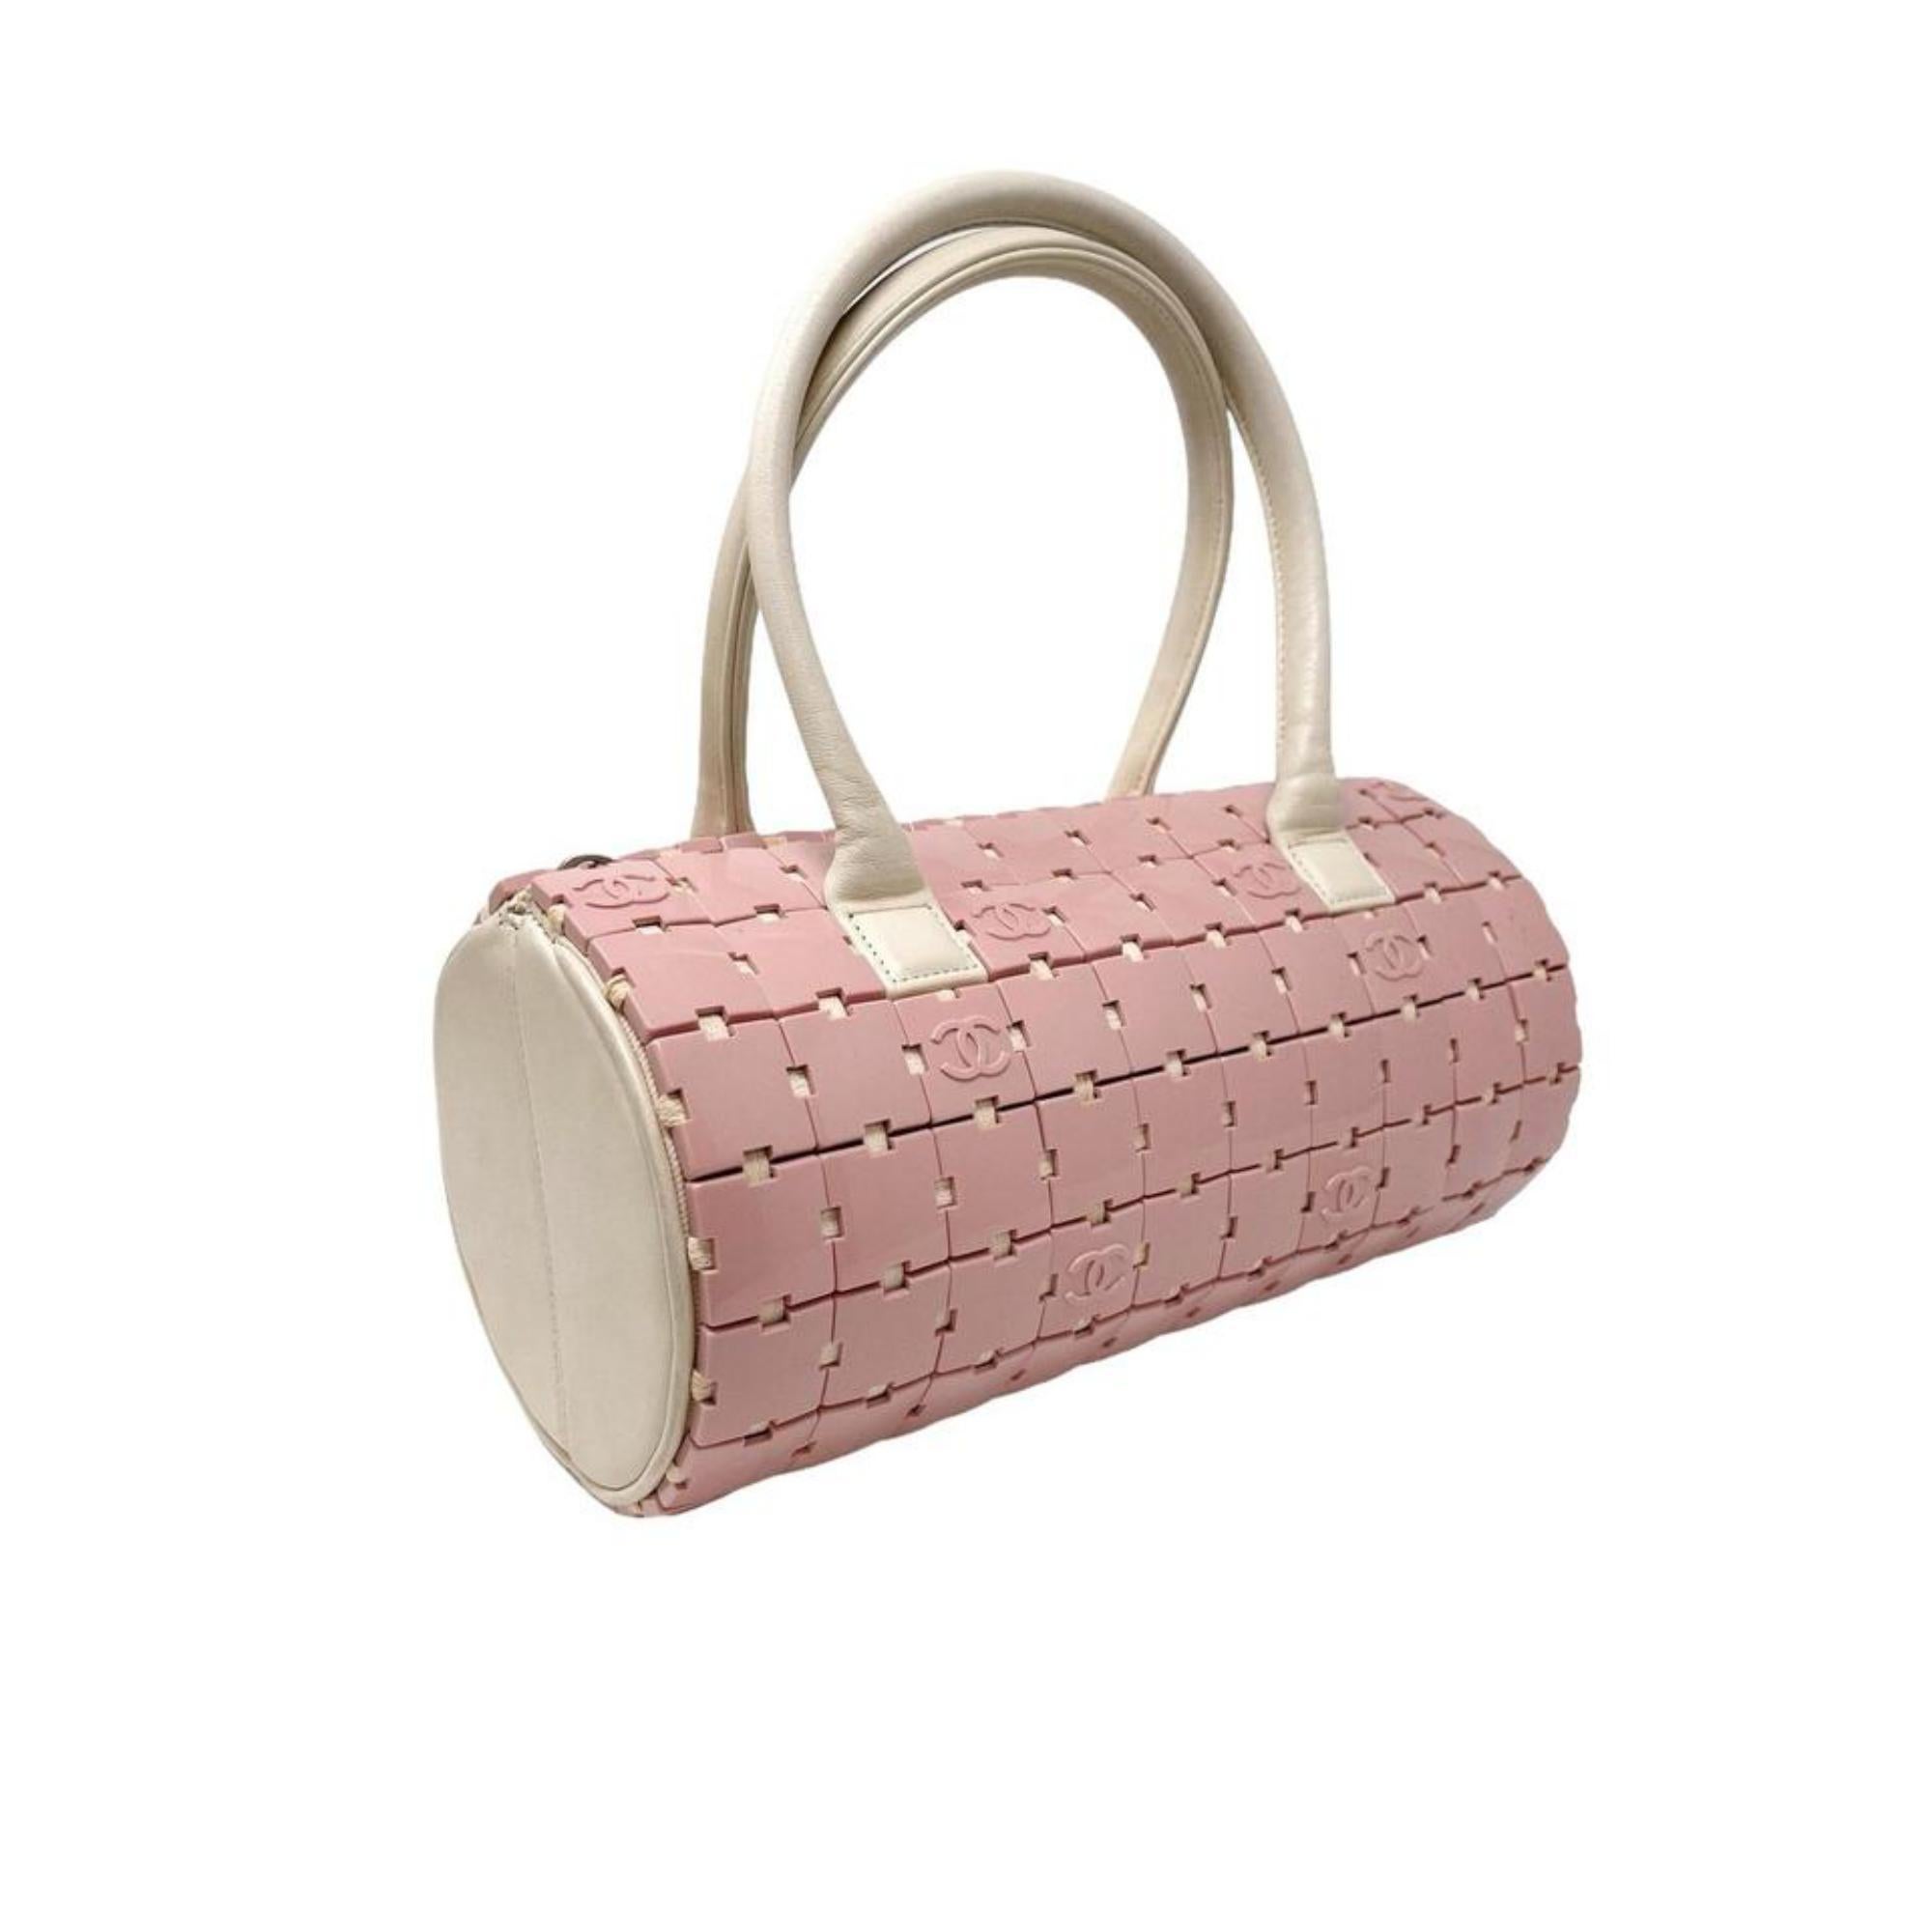 Chanel Pink Lucite CC Logo Block Puzzle Cylinder Barrel Bag 30cz413s
Date Code/Serial Number: 6779362
Made In: France
Measurements: Length:  10.5